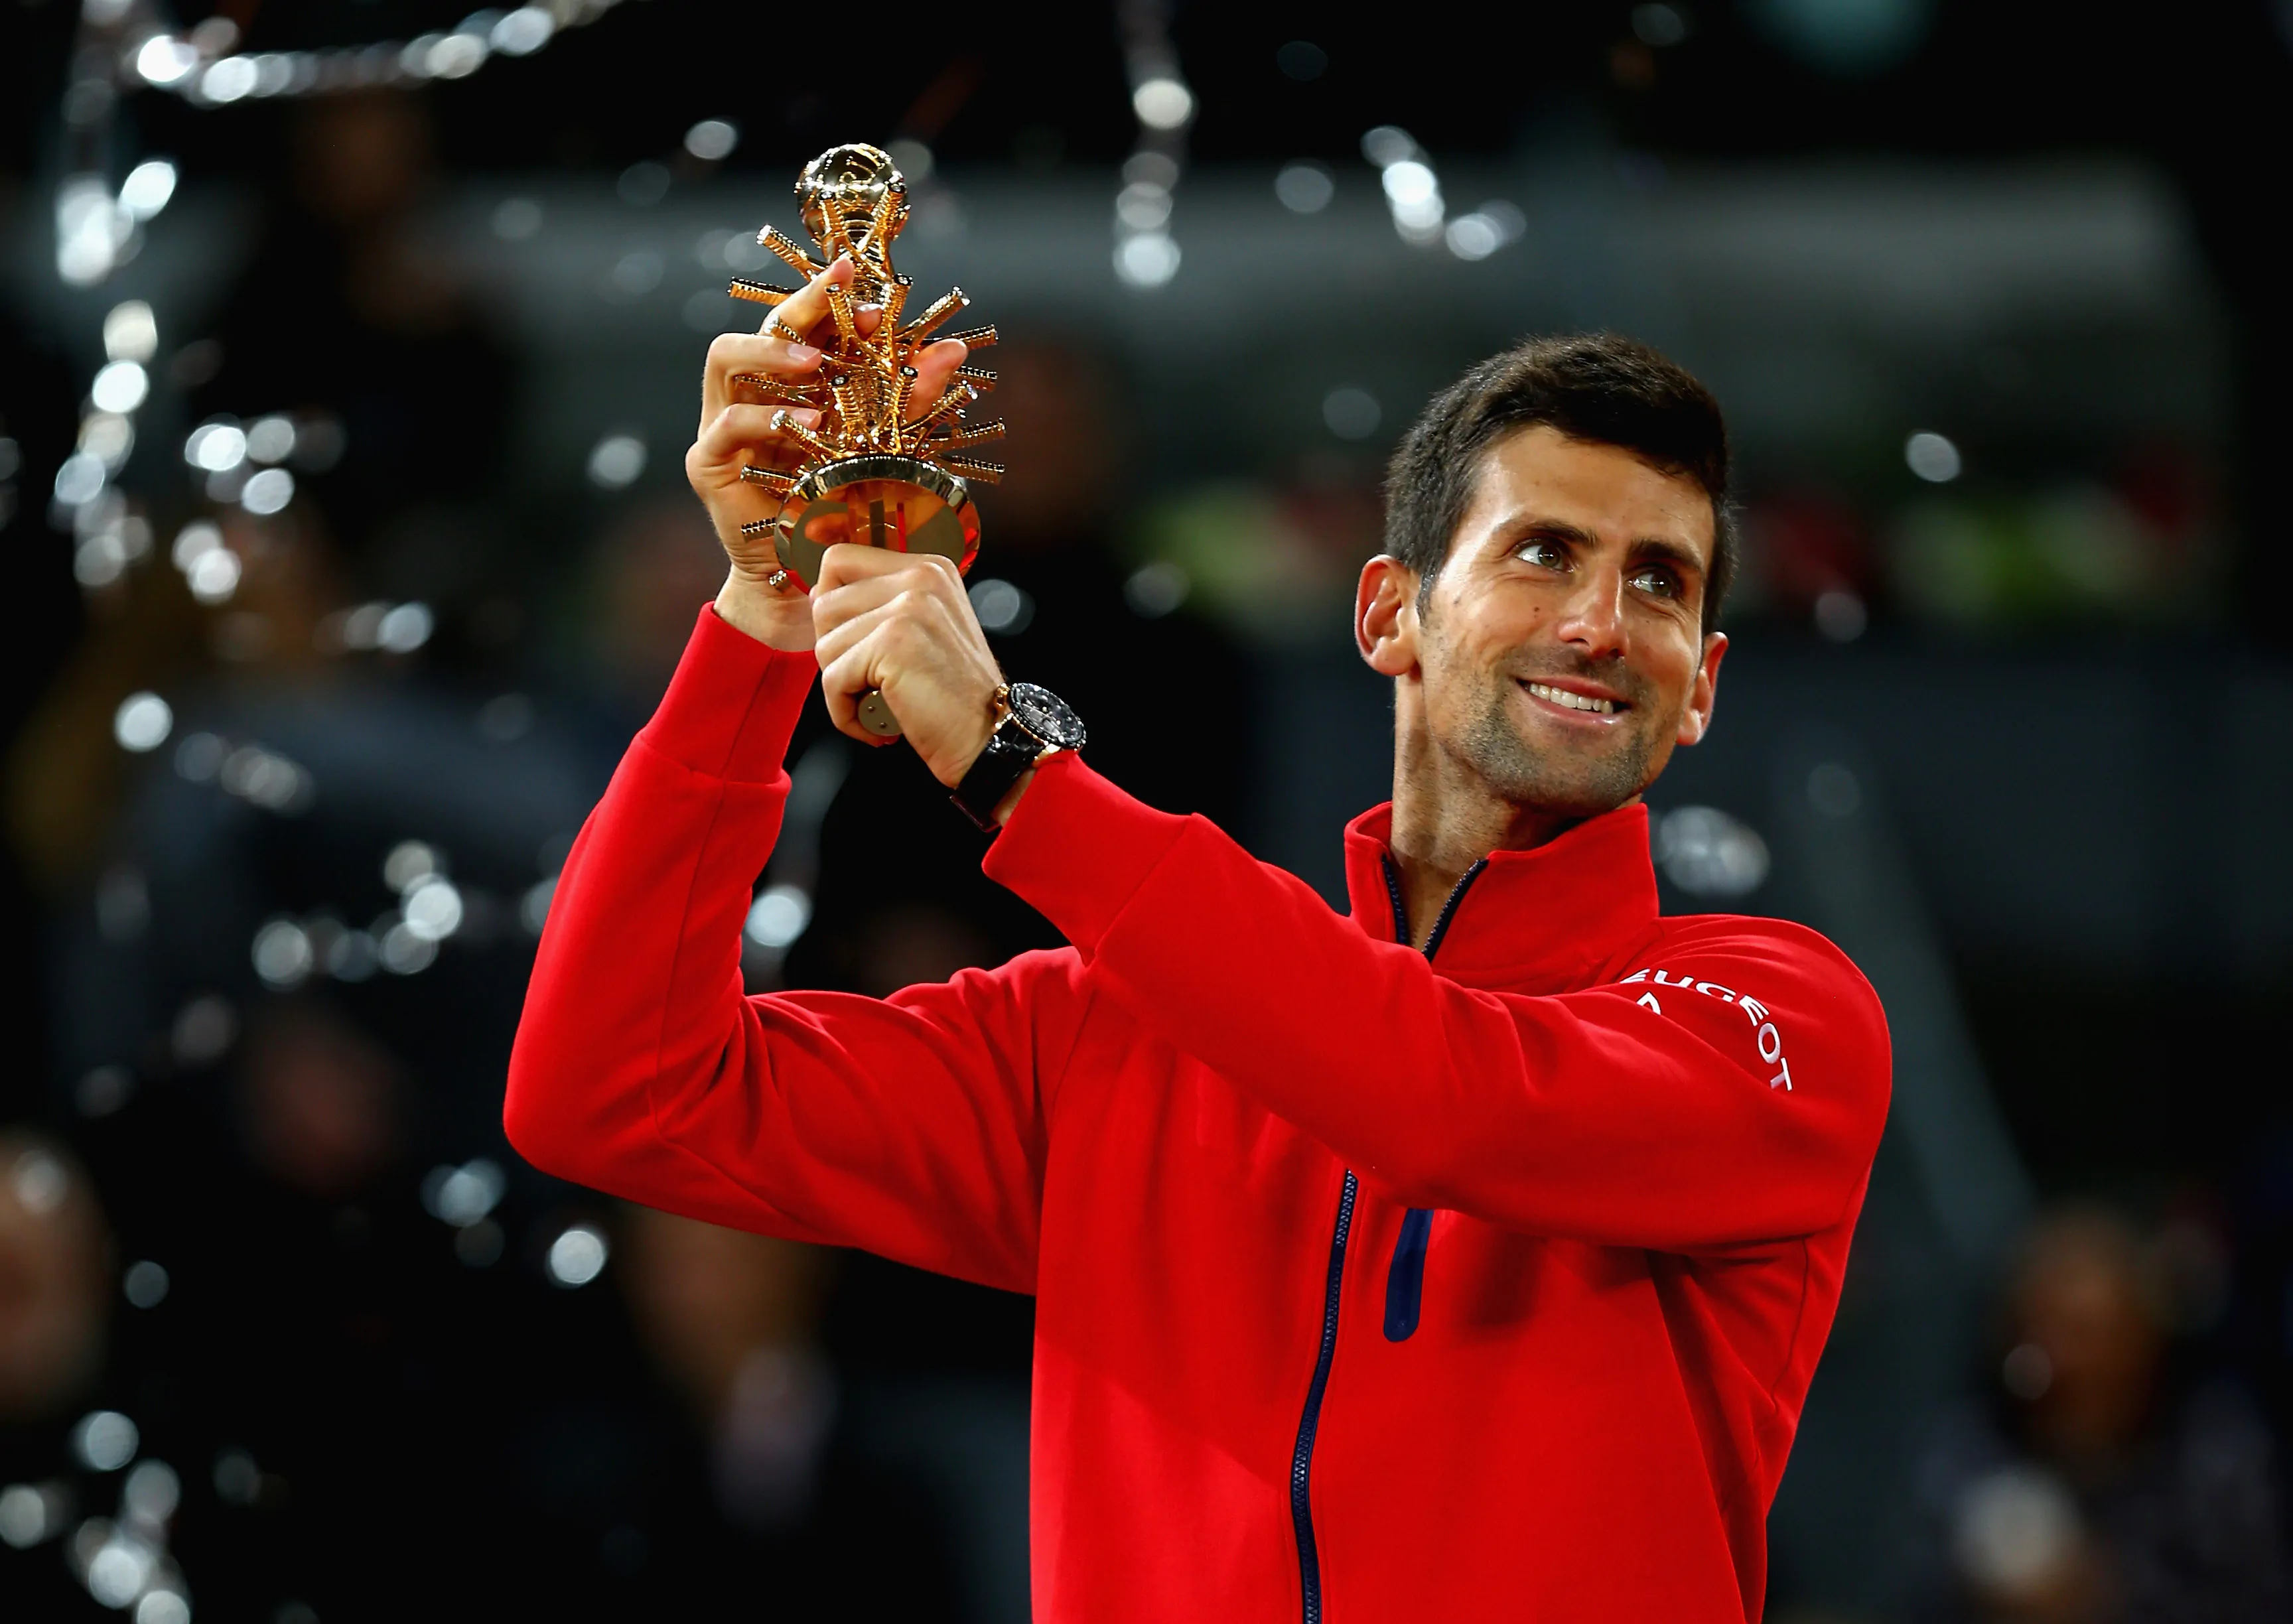 Tennis Djokovic vince torneo di Madrid, in arrivo a Roma